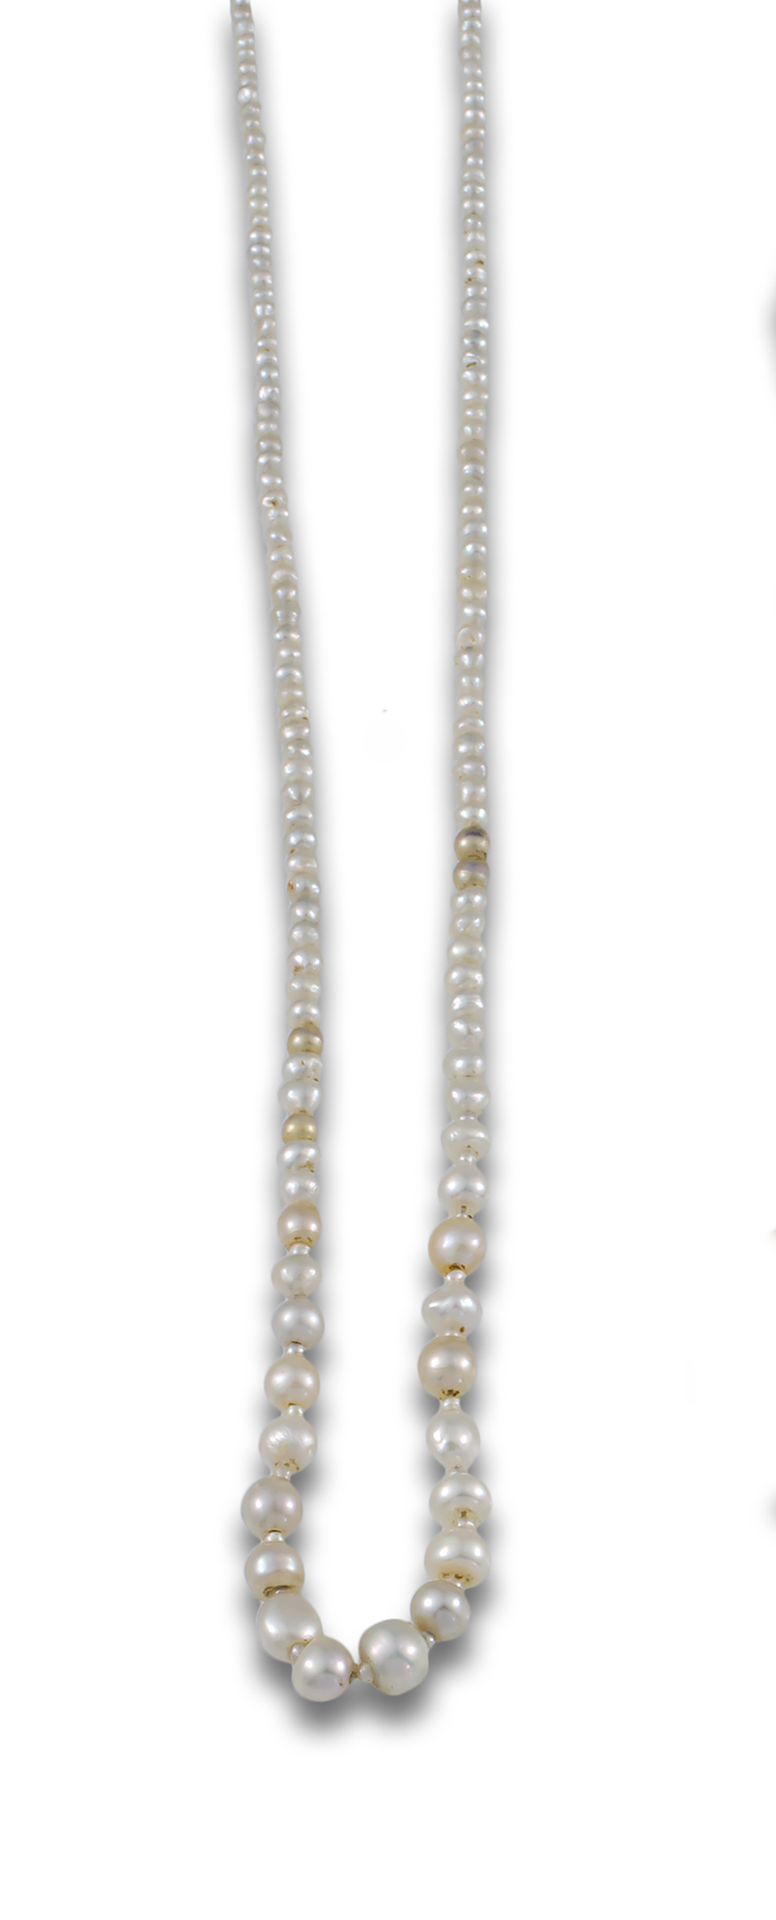 NECKLACE XIX PEARLS GOLD CLASP Collar s. XIX con perlas cultivadas en disminució&hellip;